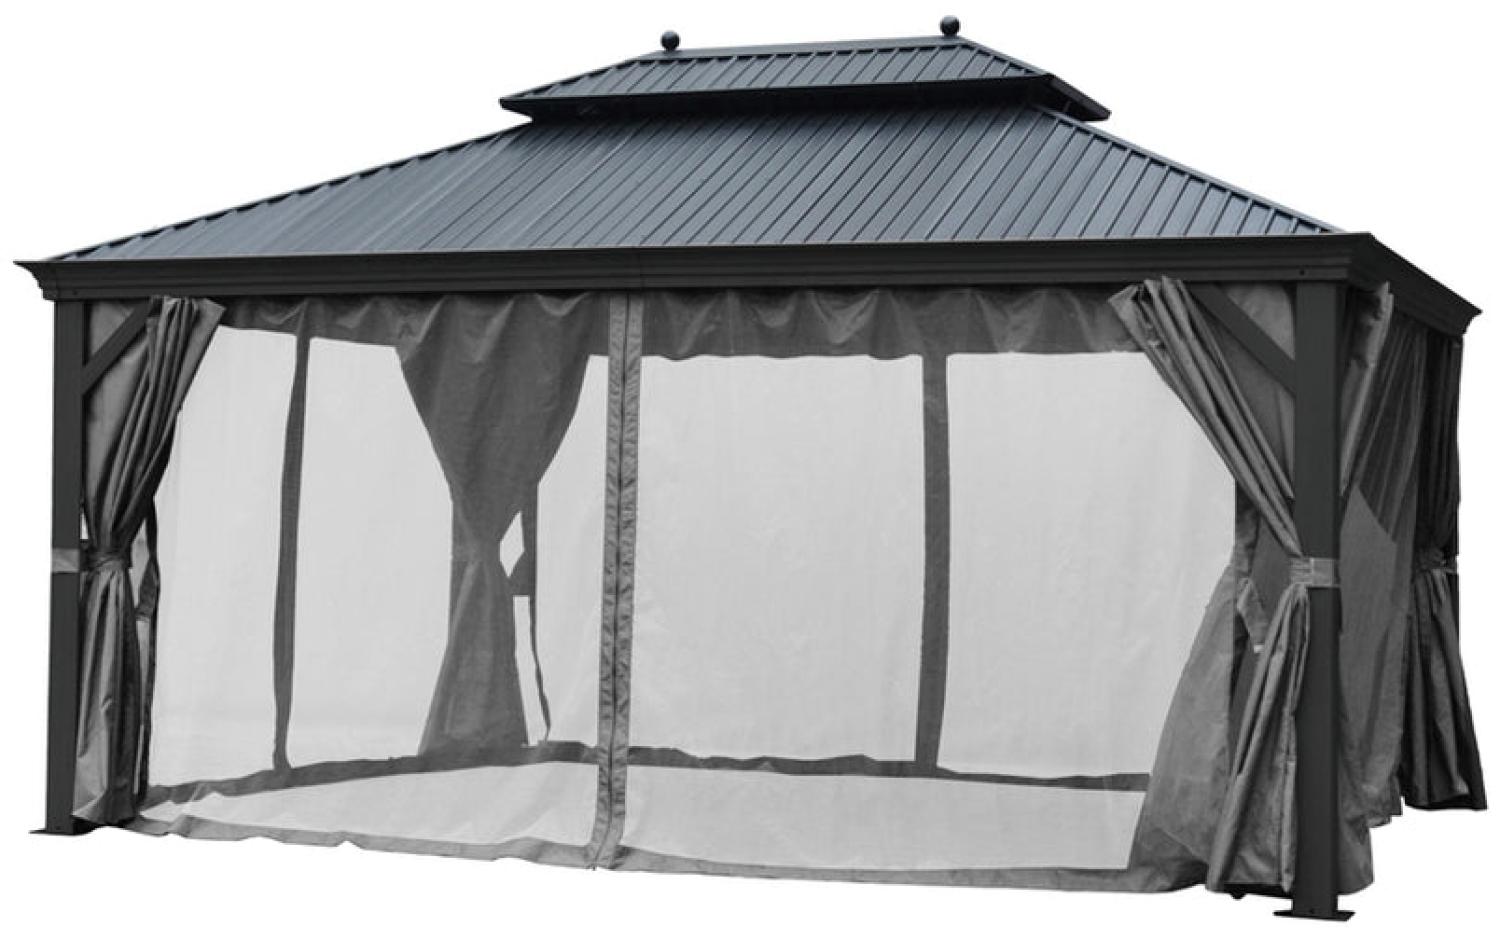 Premium Pavillon Garten Pergola mit festem Metall Dach+Alu Gestell Massiv+Sonnenschutz Bild 1